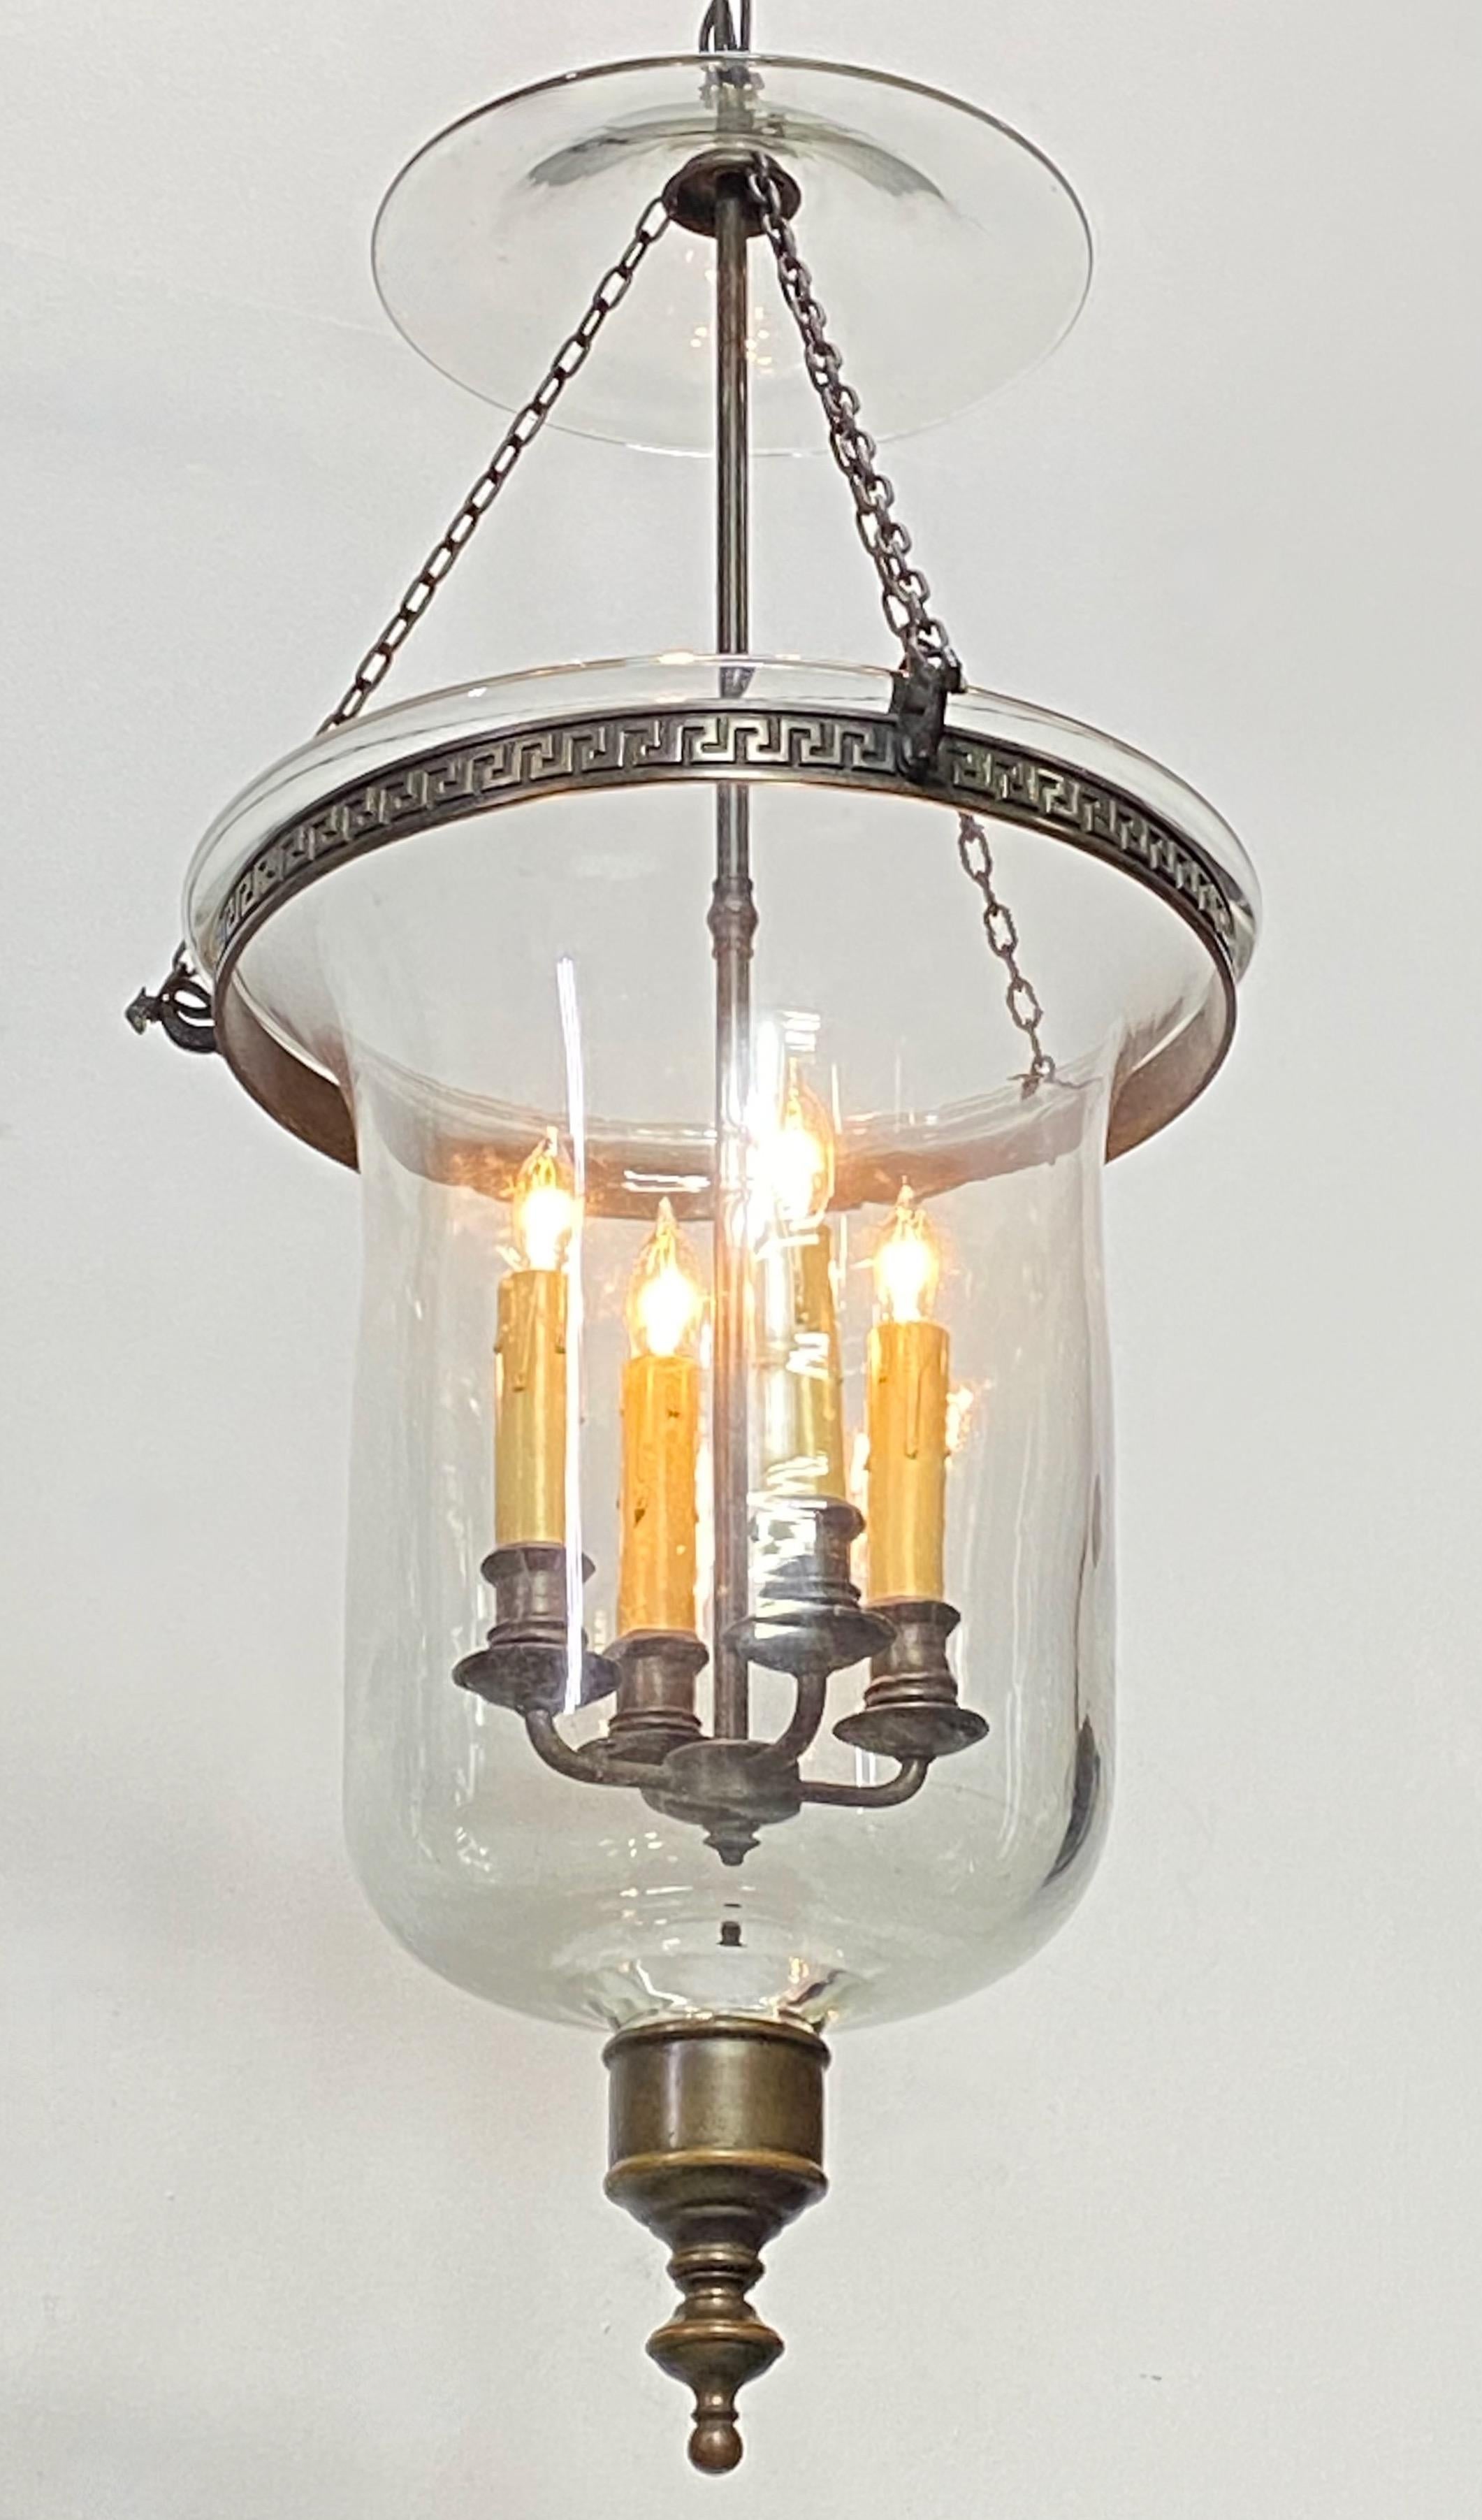 American Vintage Bronze and Glass Hurricane Lantern Pendant Light Fixture